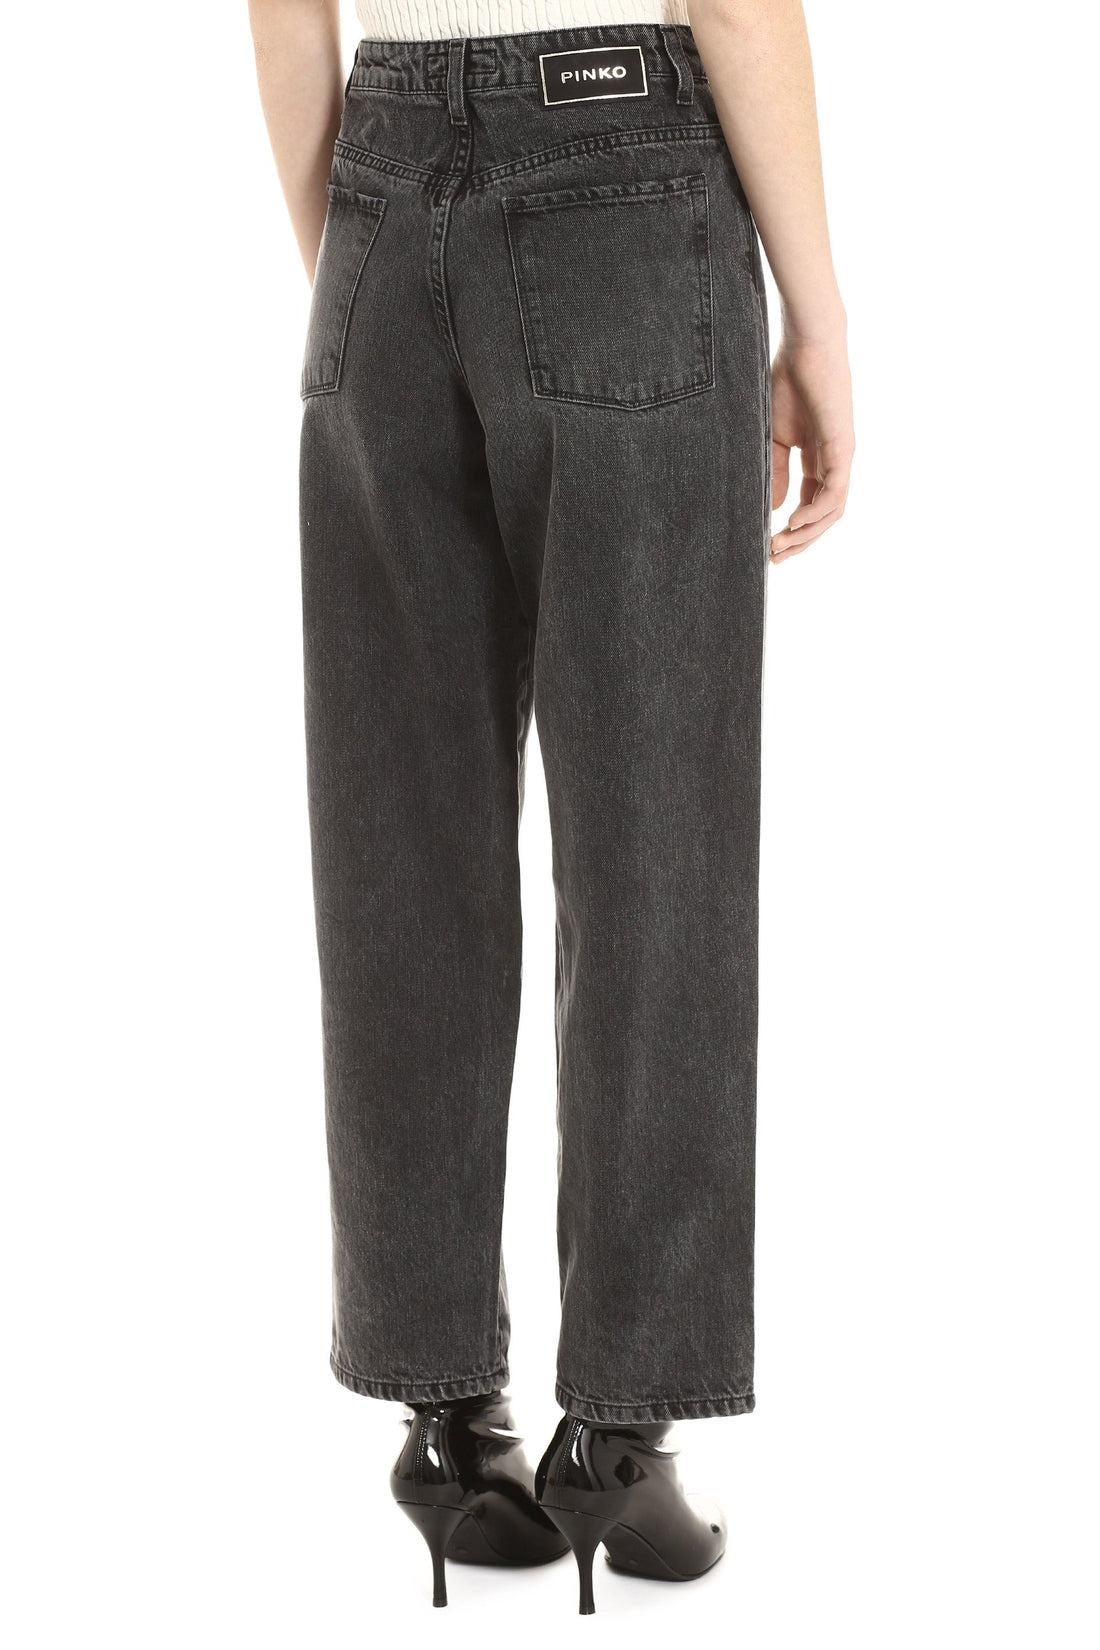 Pinko-OUTLET-SALE-Deja Vu 5-pocket jeans-ARCHIVIST